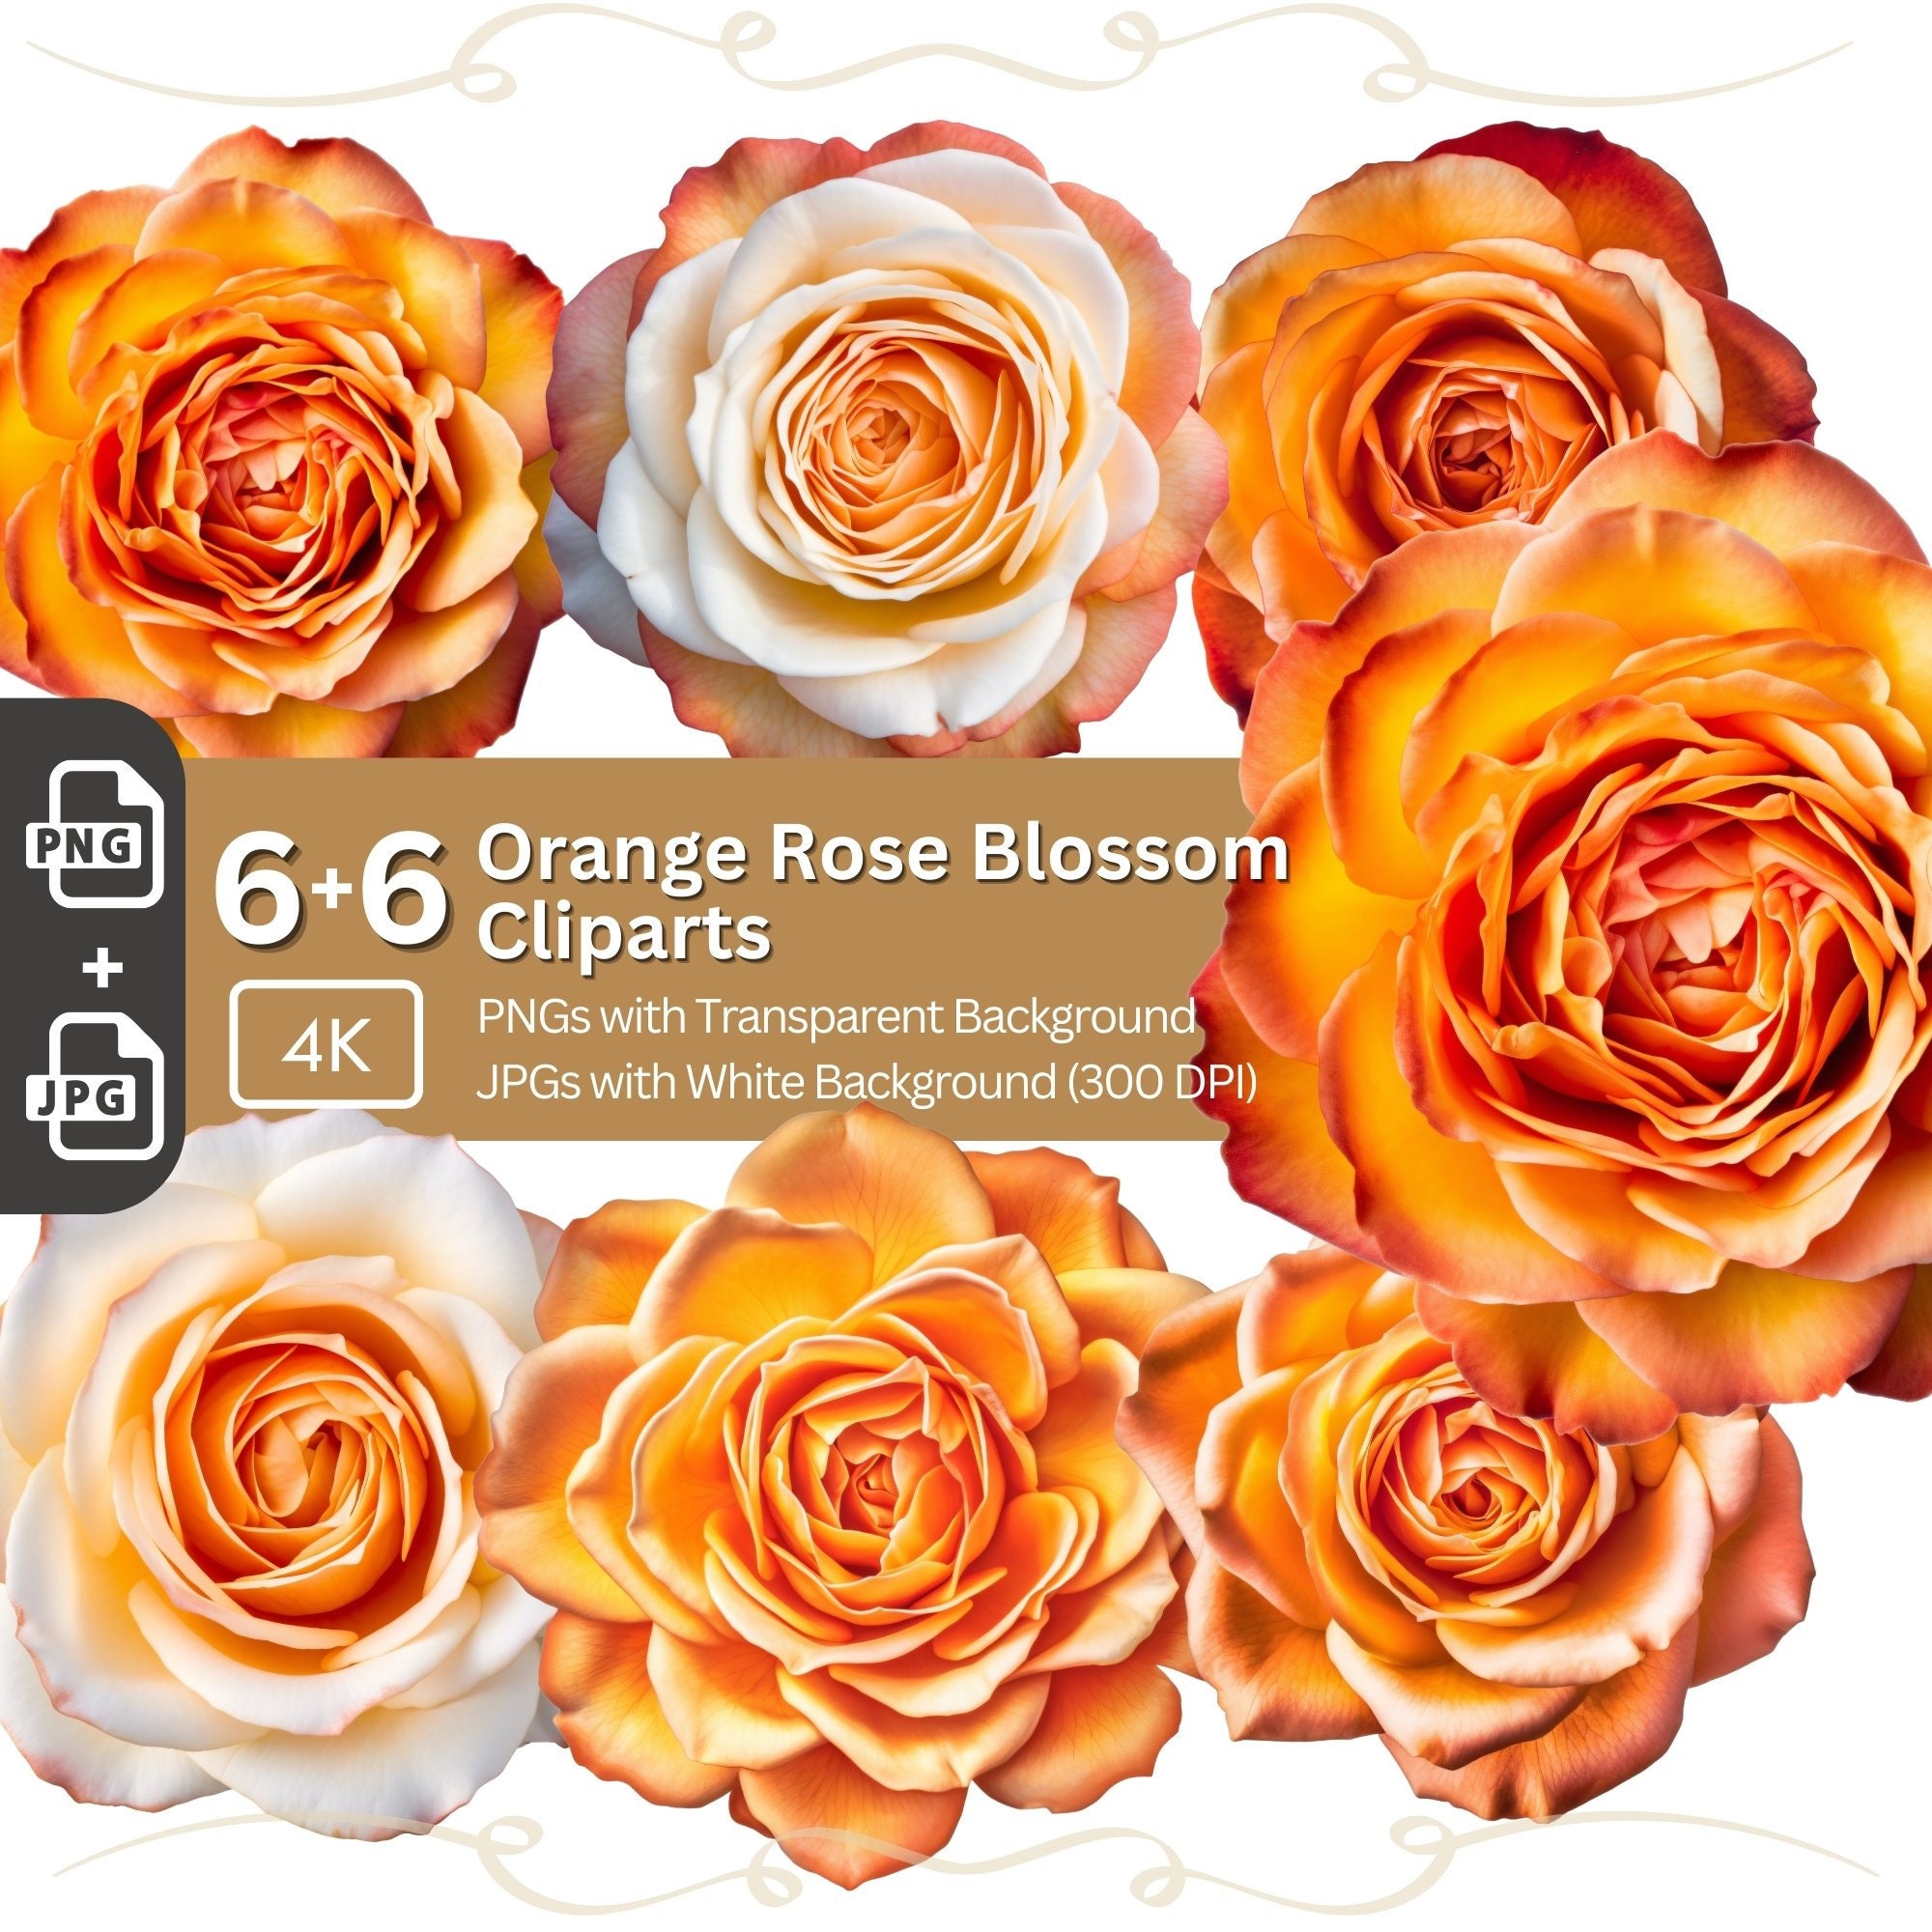 Wedding Car Decoration- Heart Shape Roses 12 Color Combinations – Carsoda